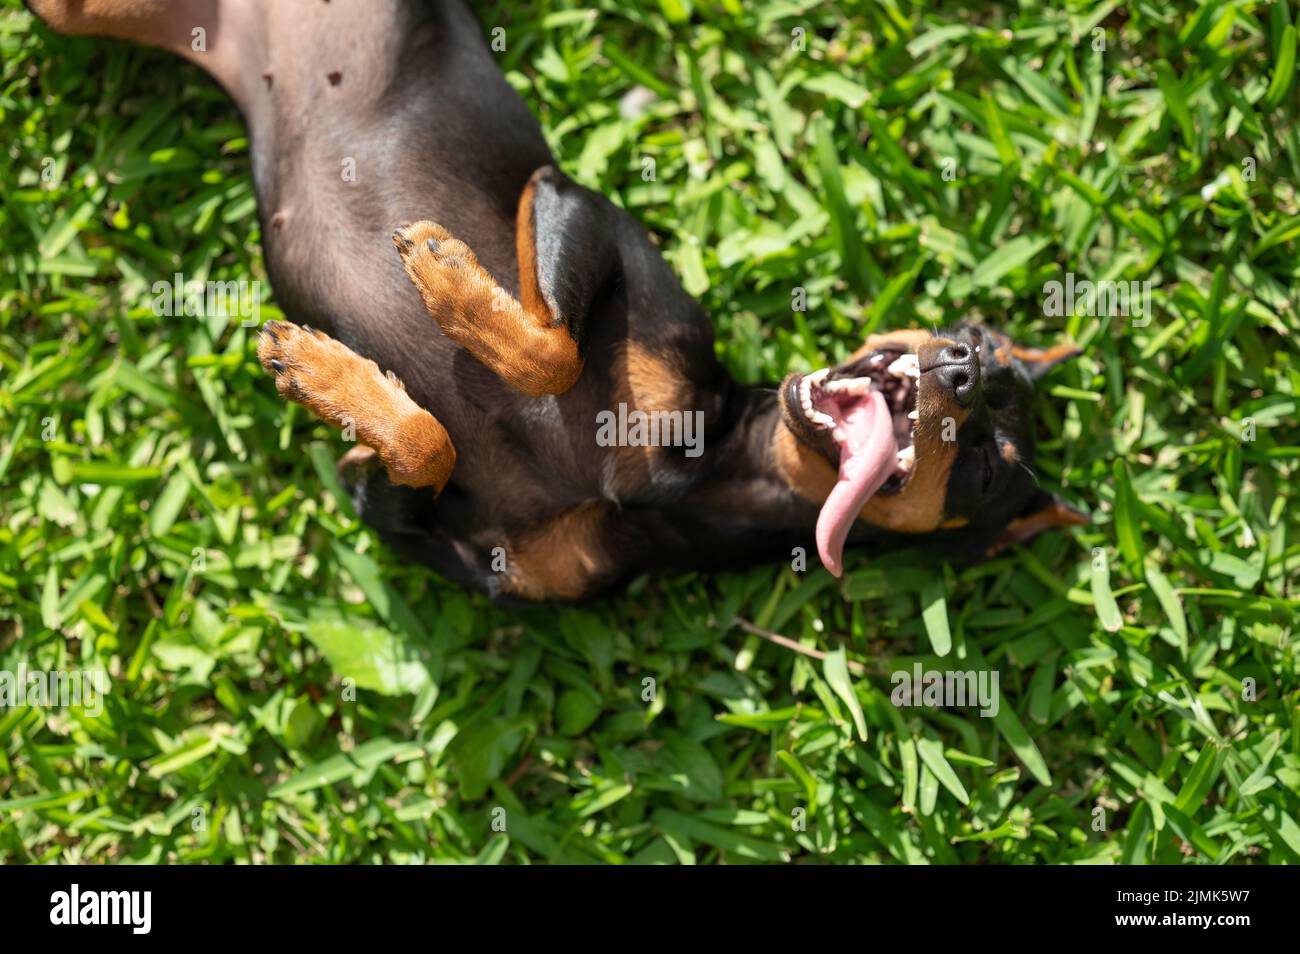 Krug Hund lag Bauch auf grünem Gras über Draufsicht Stockfoto